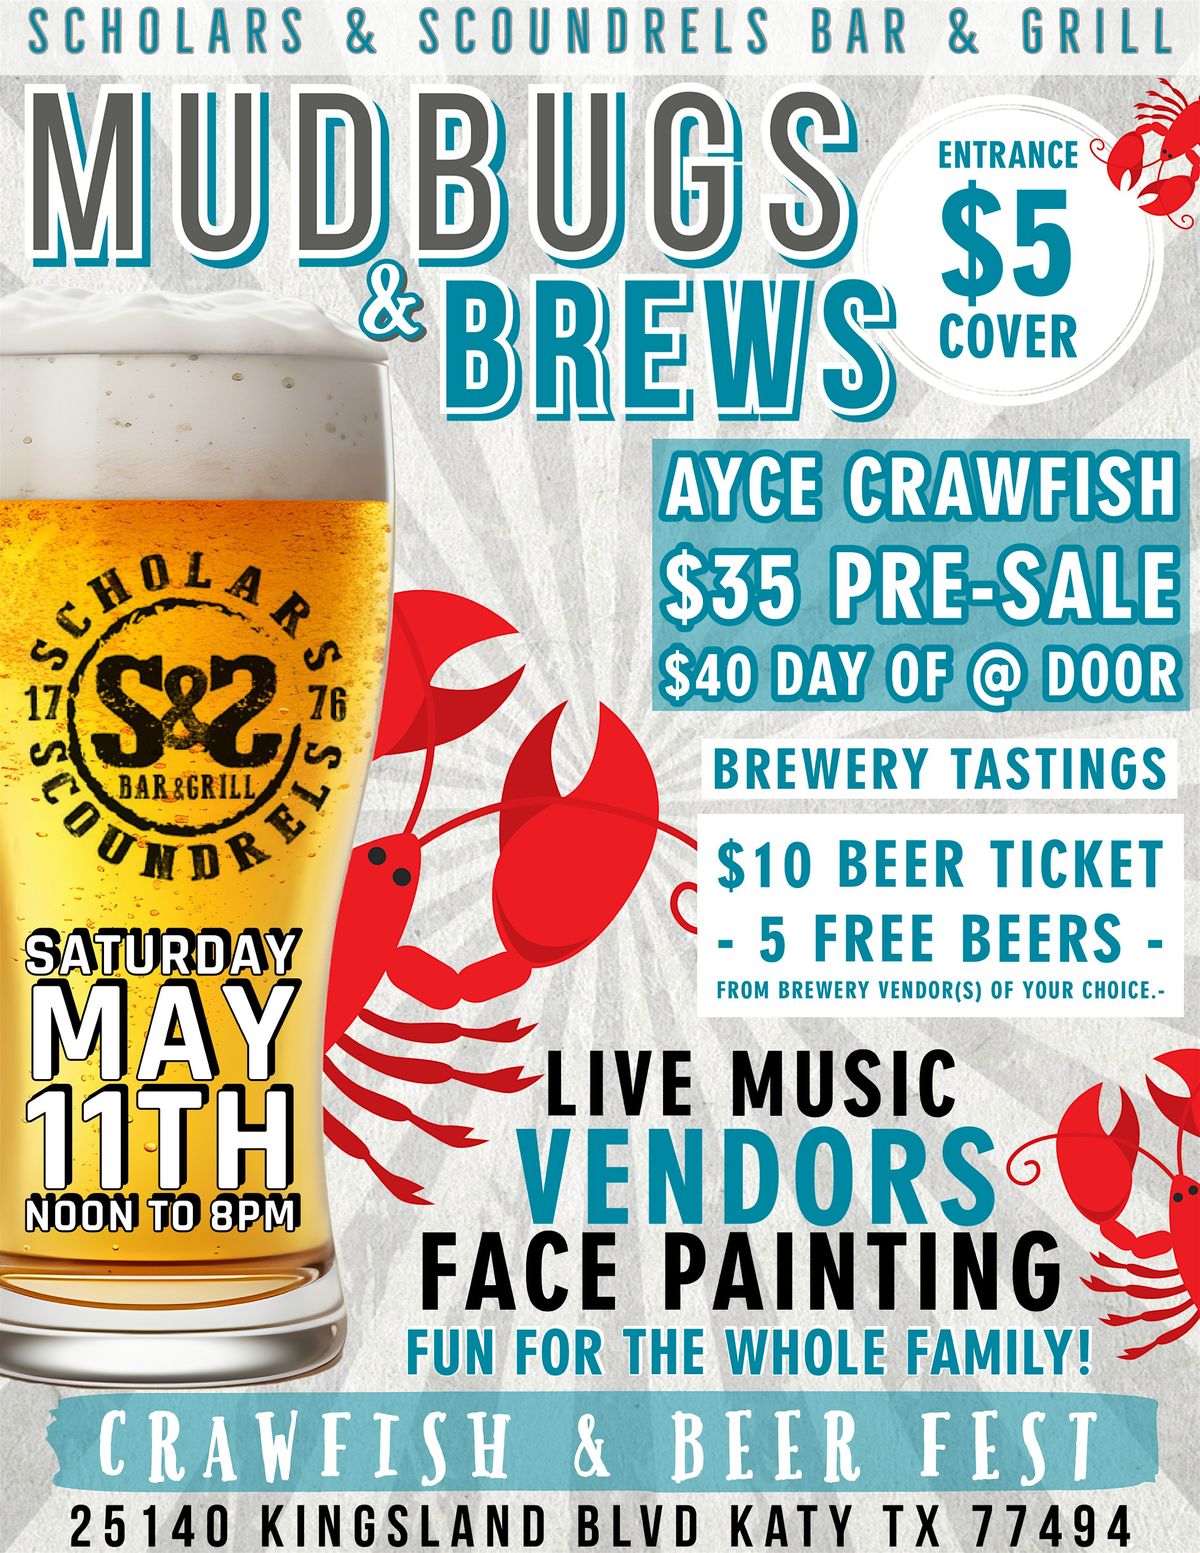 Mudbugs and Beer Fest